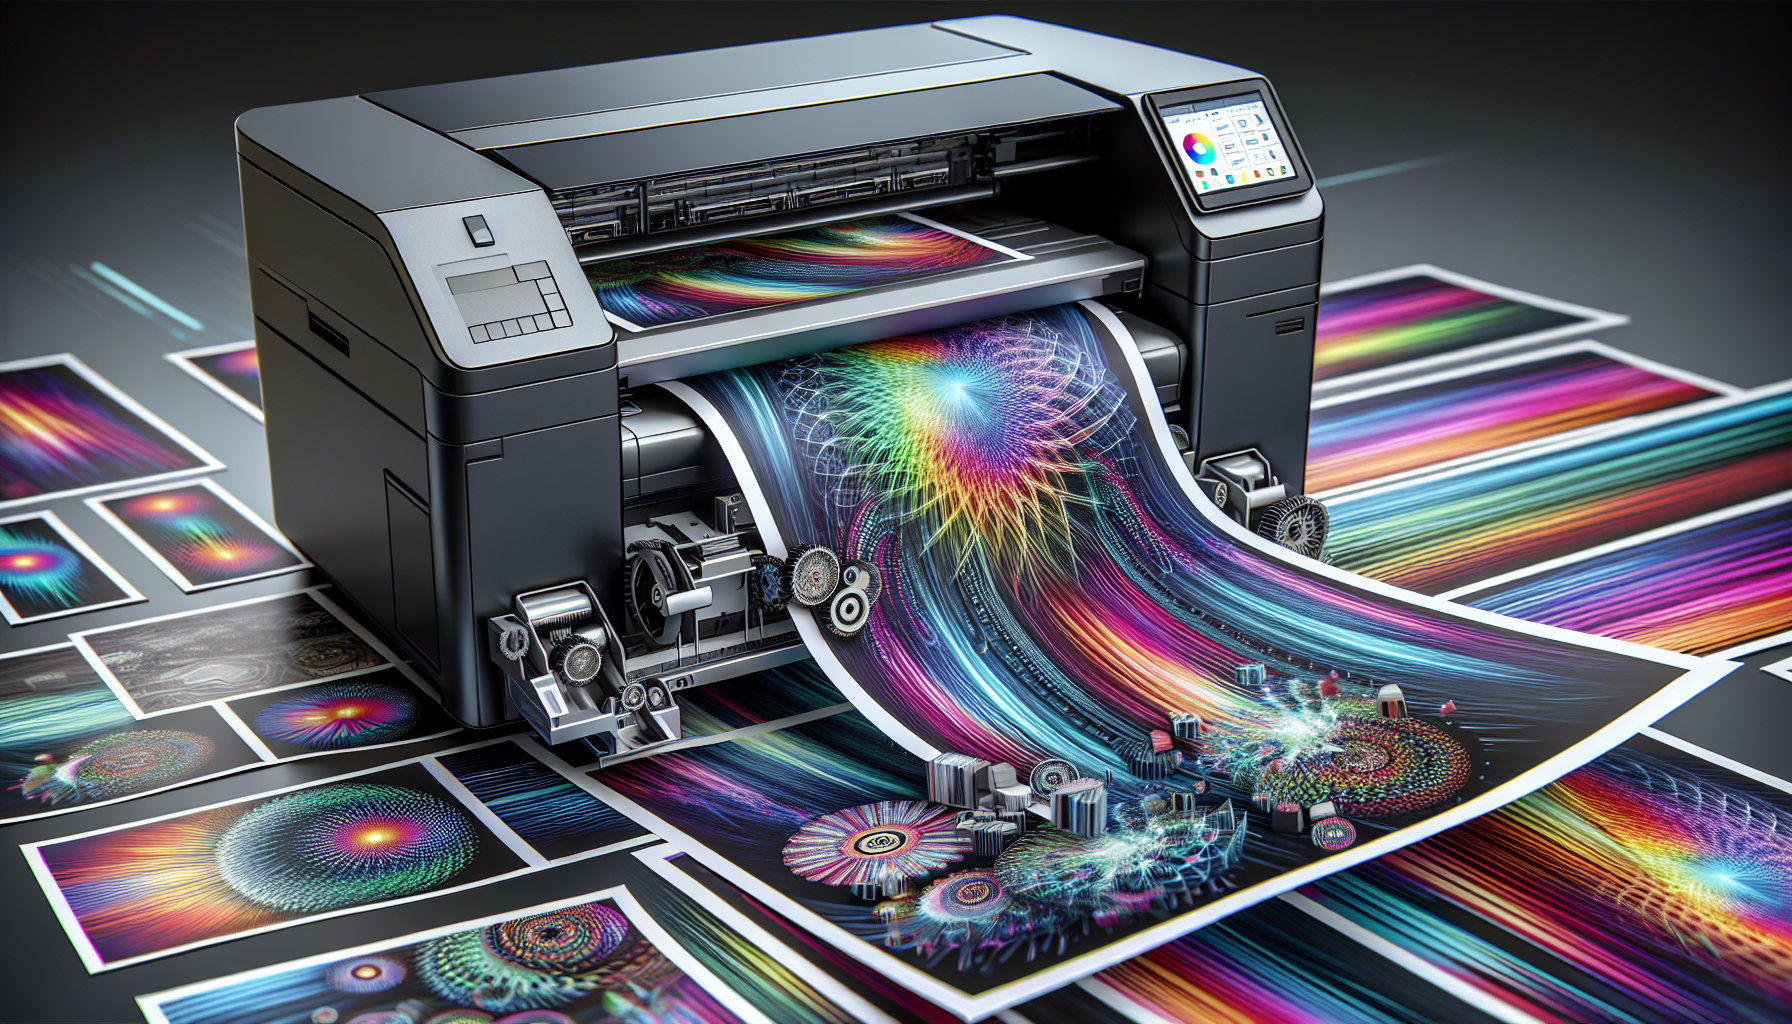 Color laserjet printer creating vibrant graphics